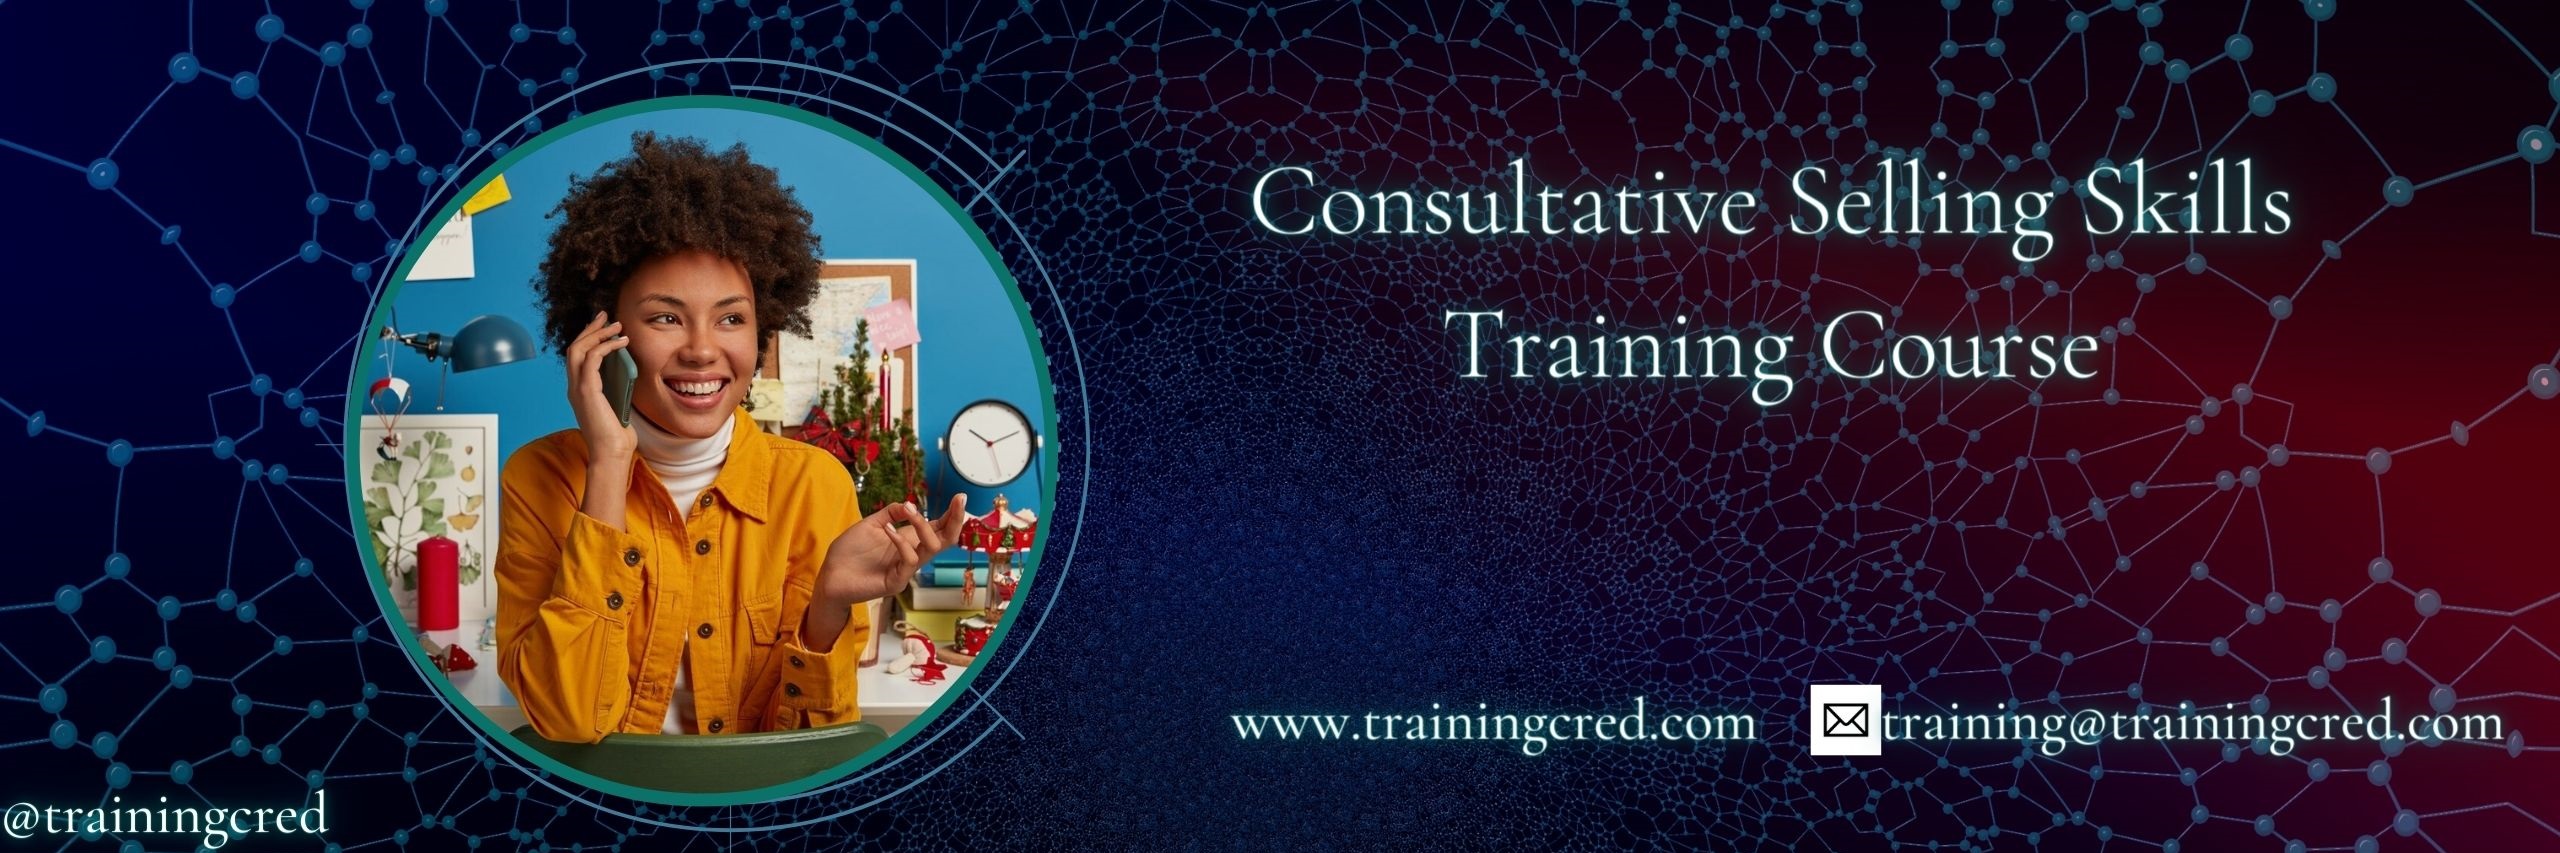 Consultative Selling Skills Training